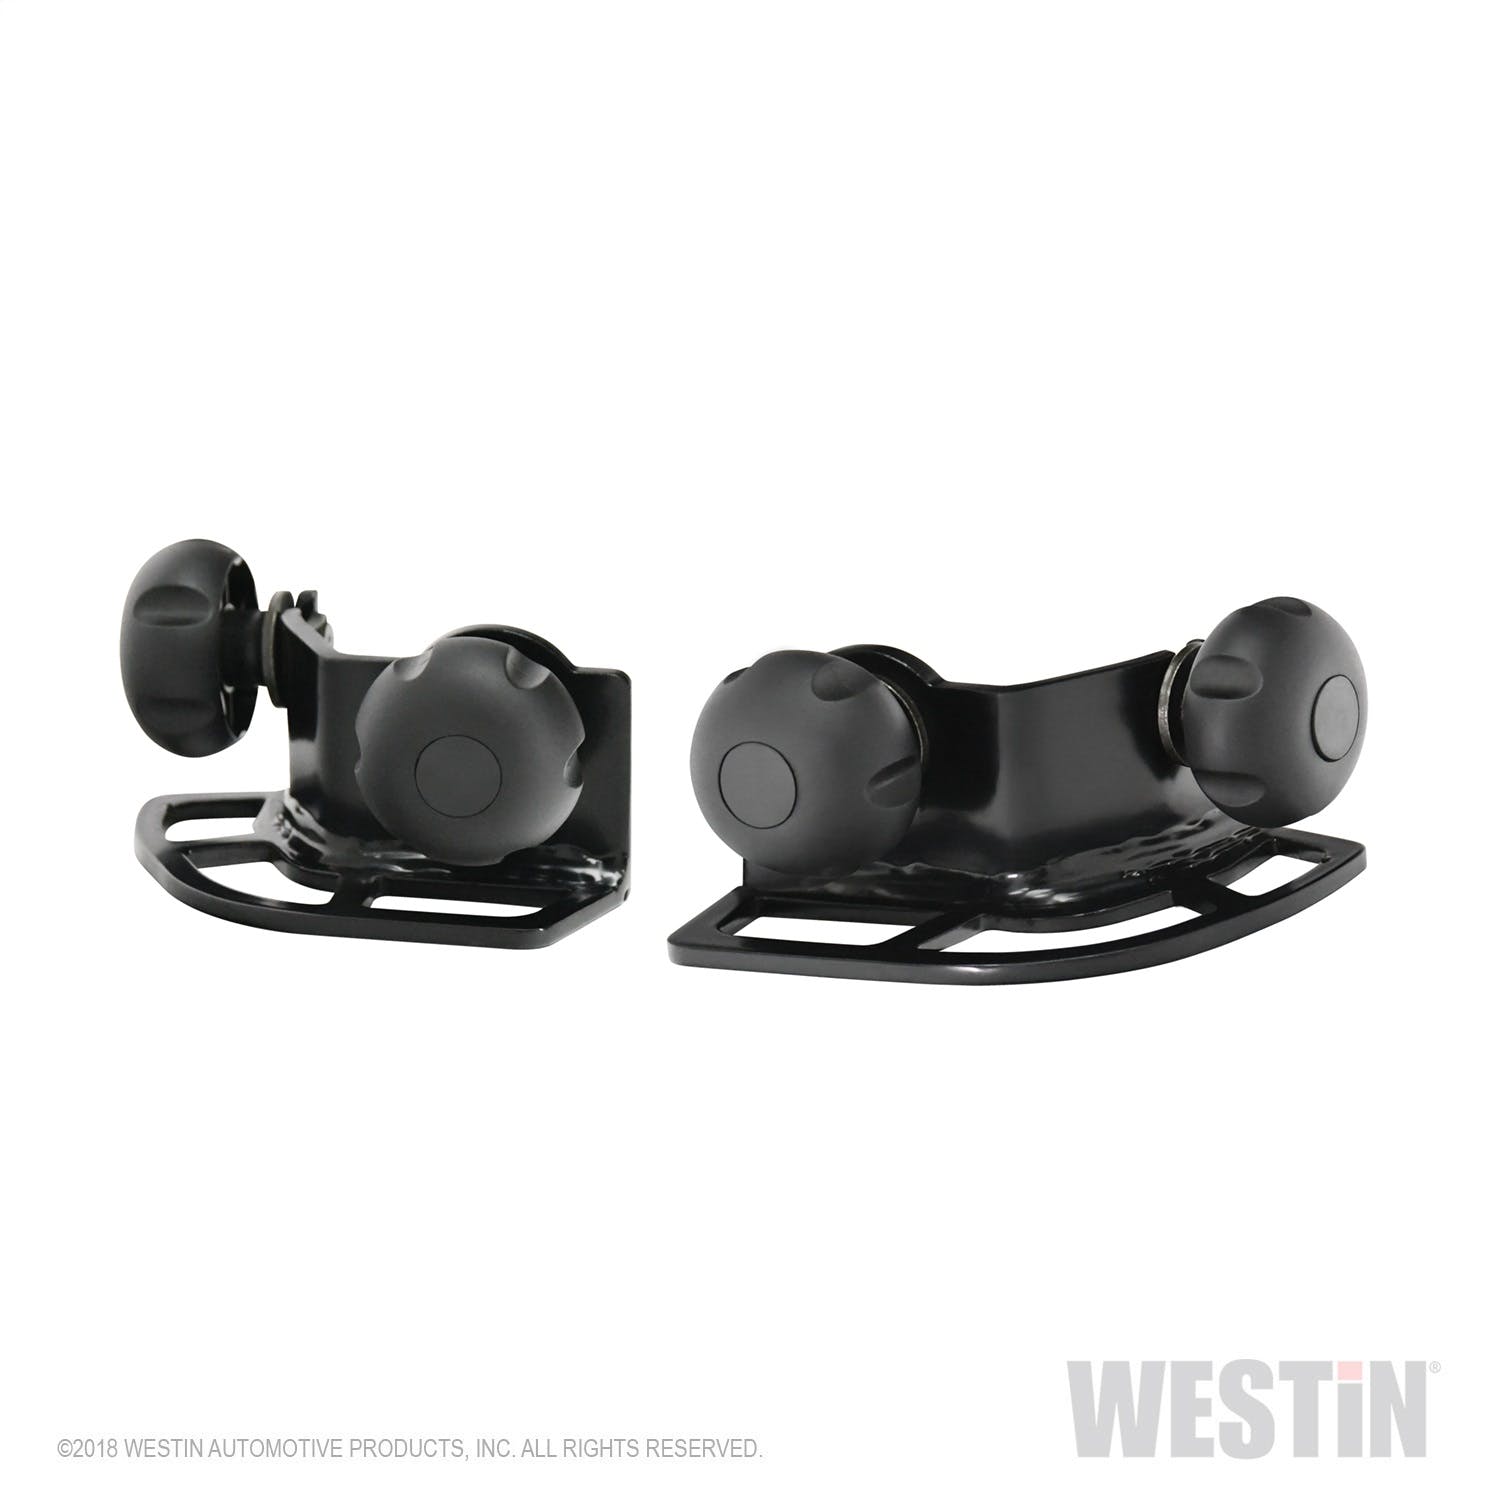 Westin Automotive 57-89015 HLR Adjustable Tie Down - Multi-Point Black